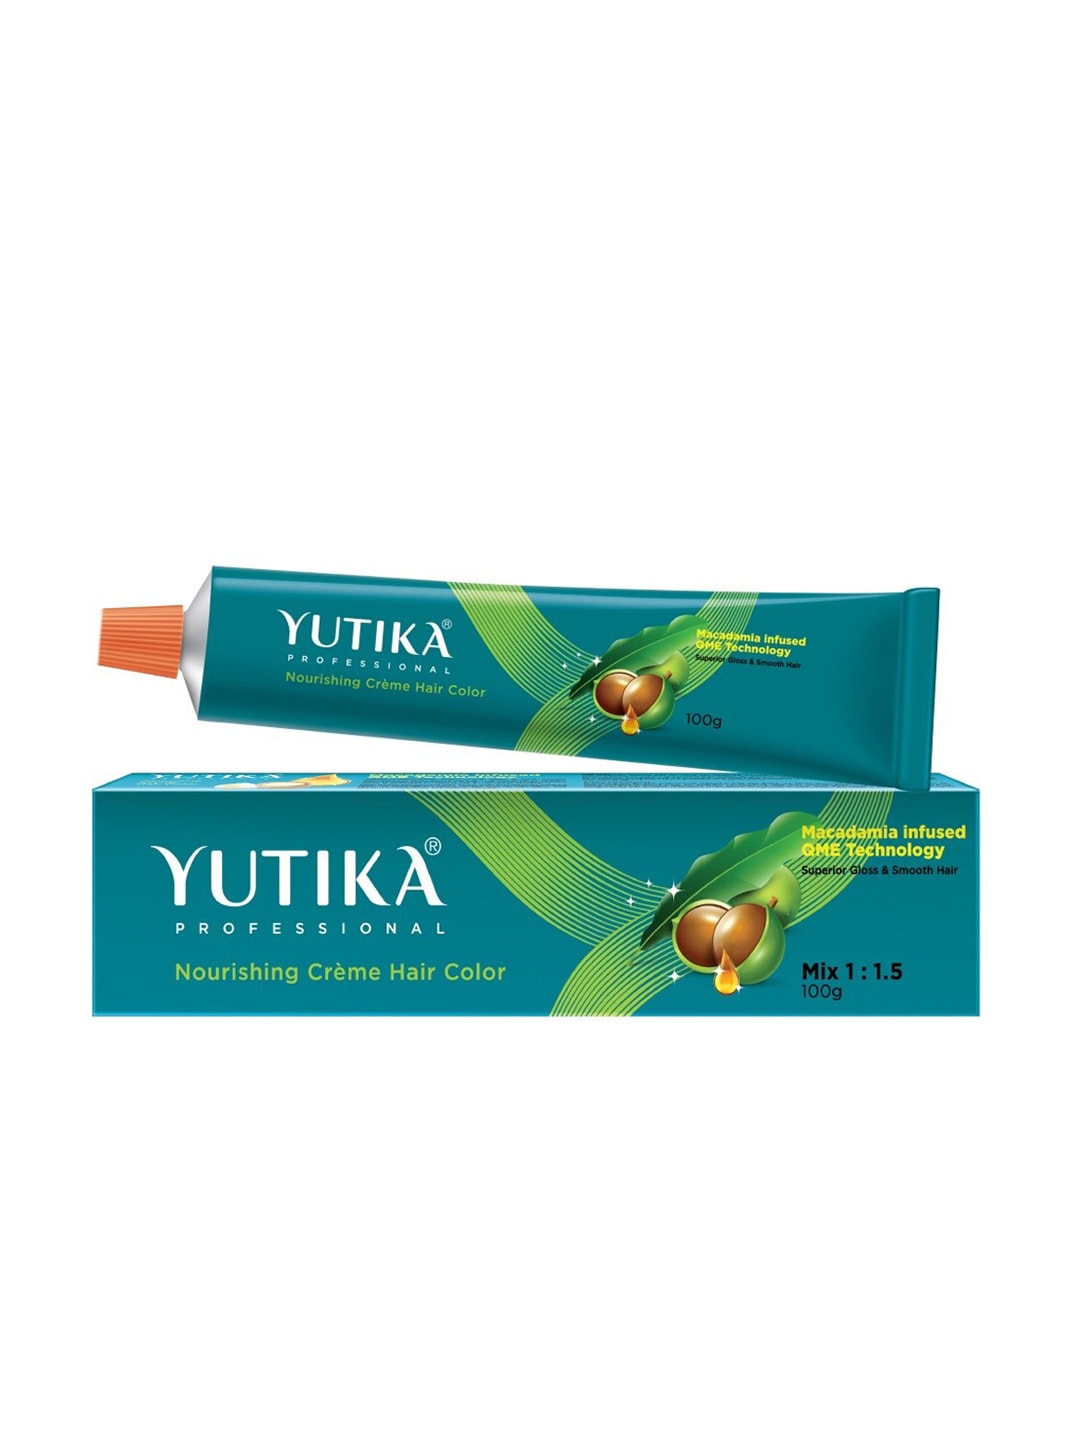 YUTIKA Professional Creme Hair Color 100gm Price in India